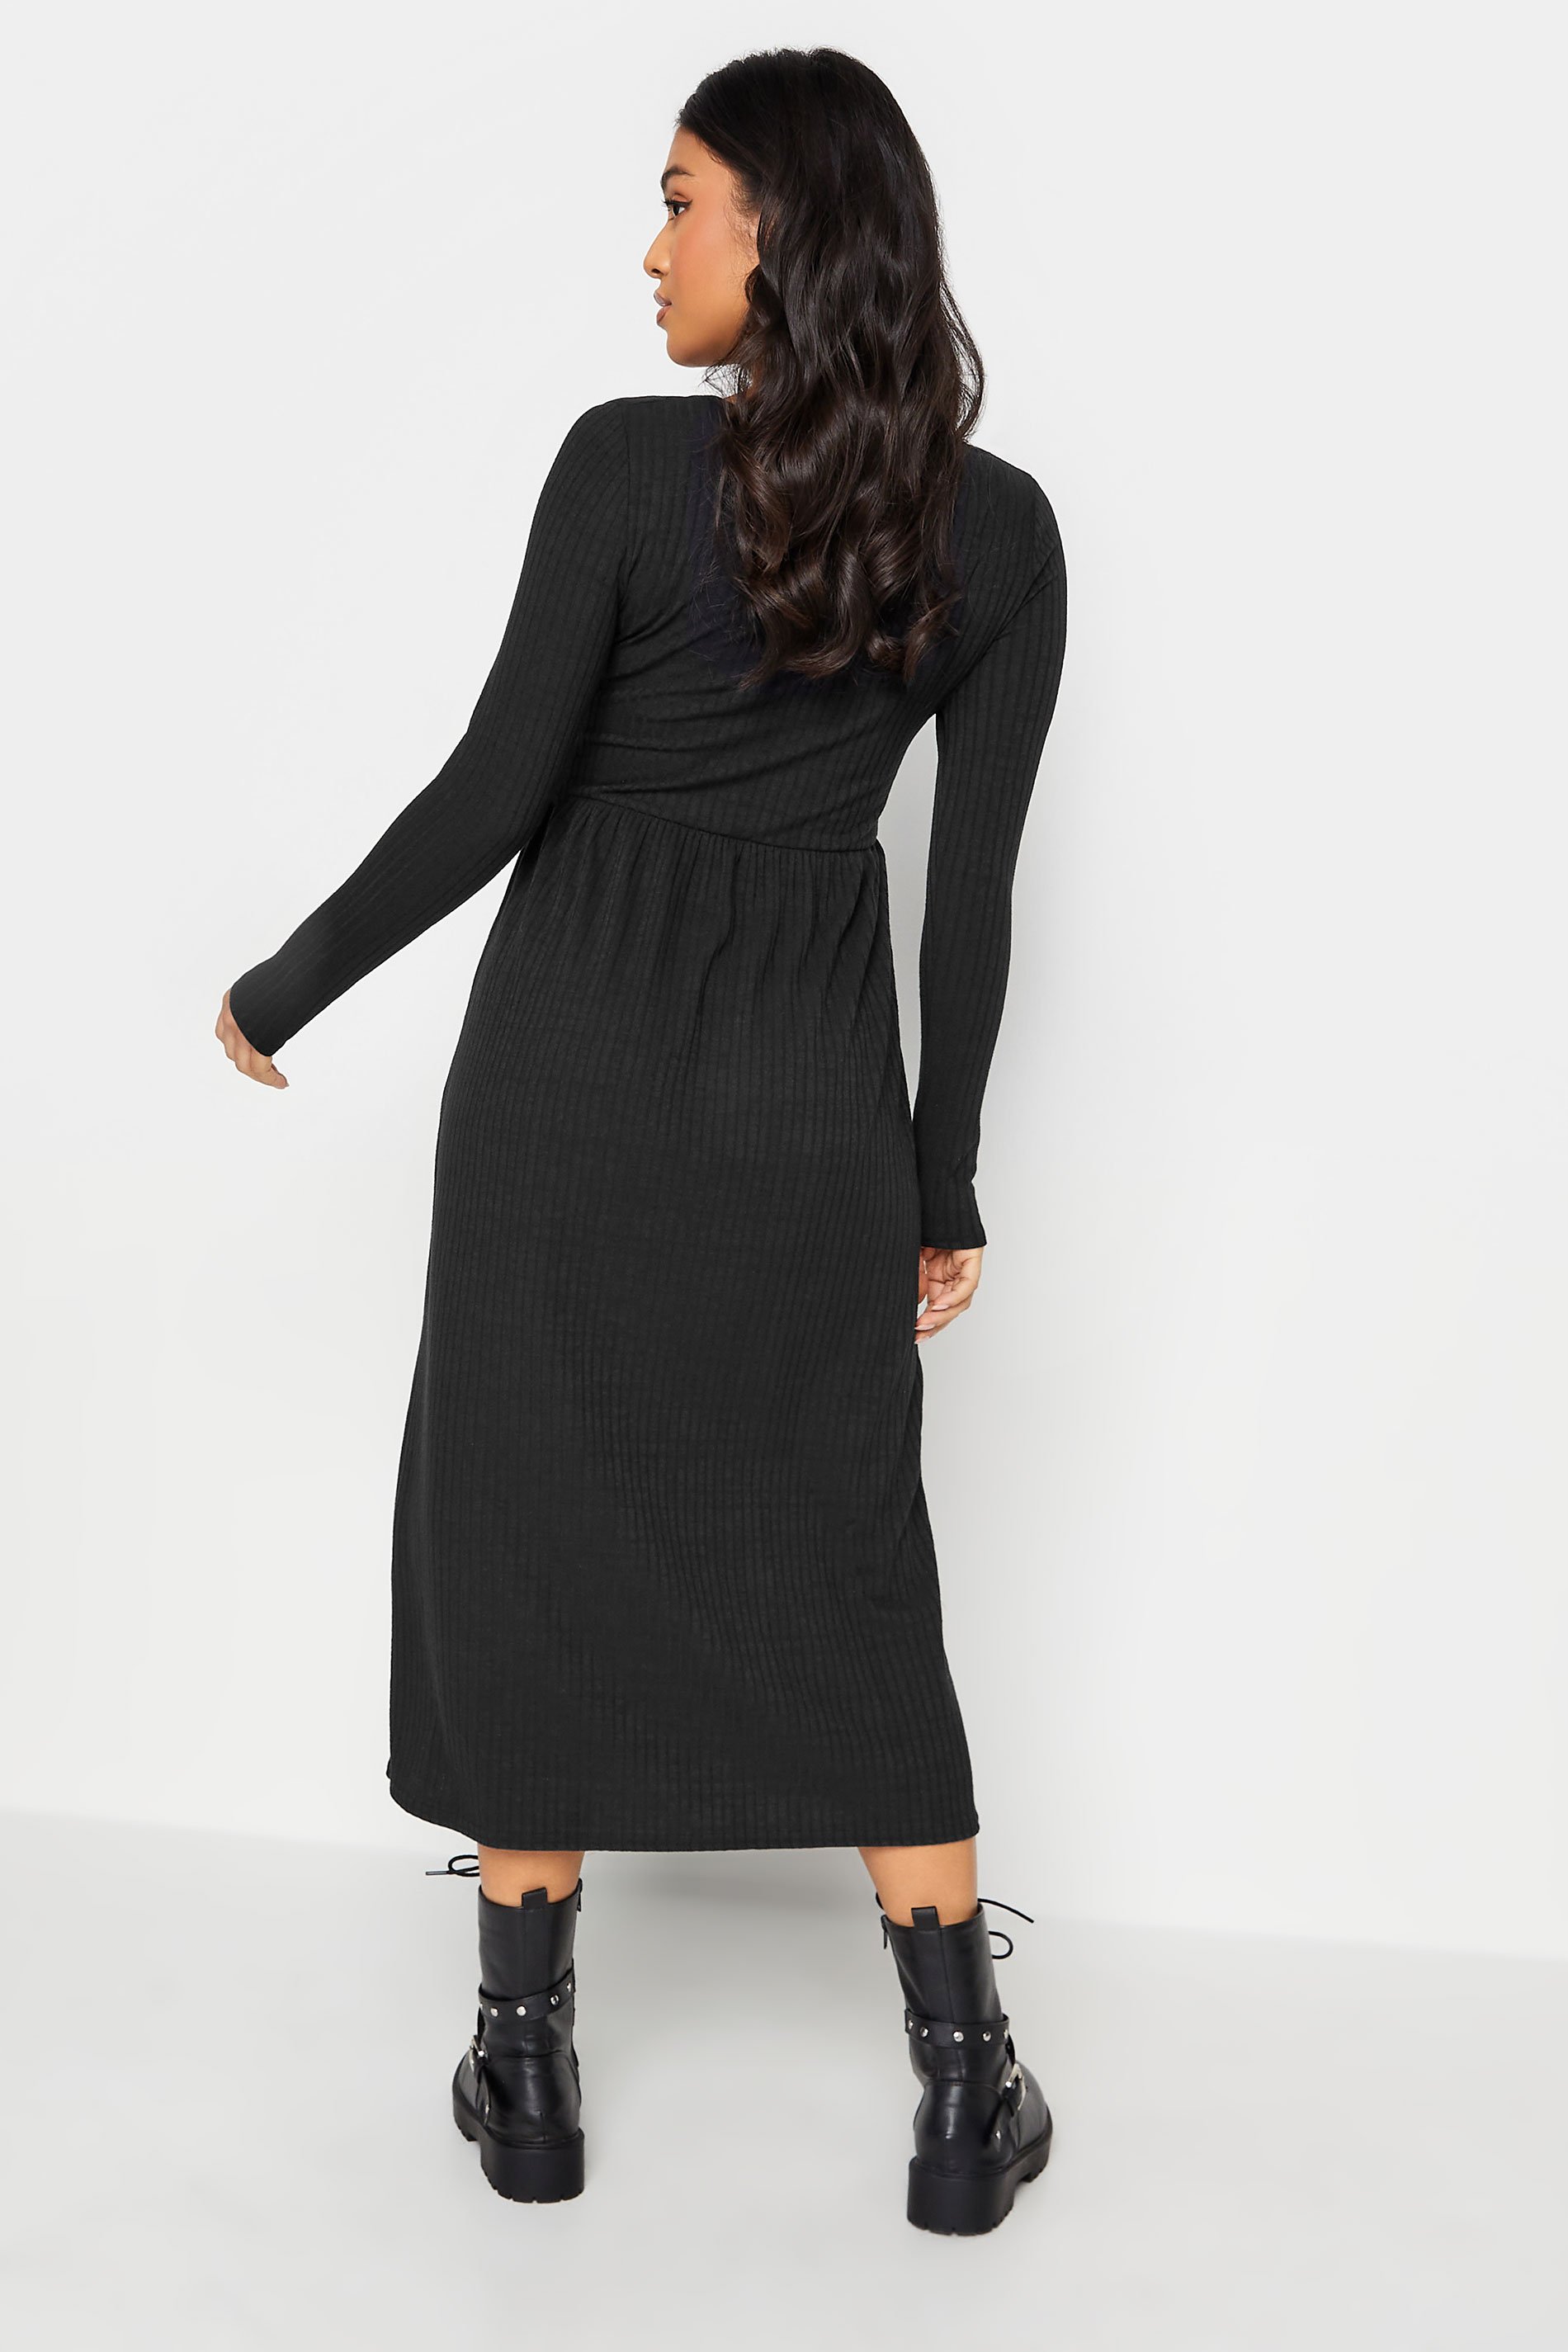 PixieGirl Black Ribbed Long Sleeve Button Dress | PixieGirl  3